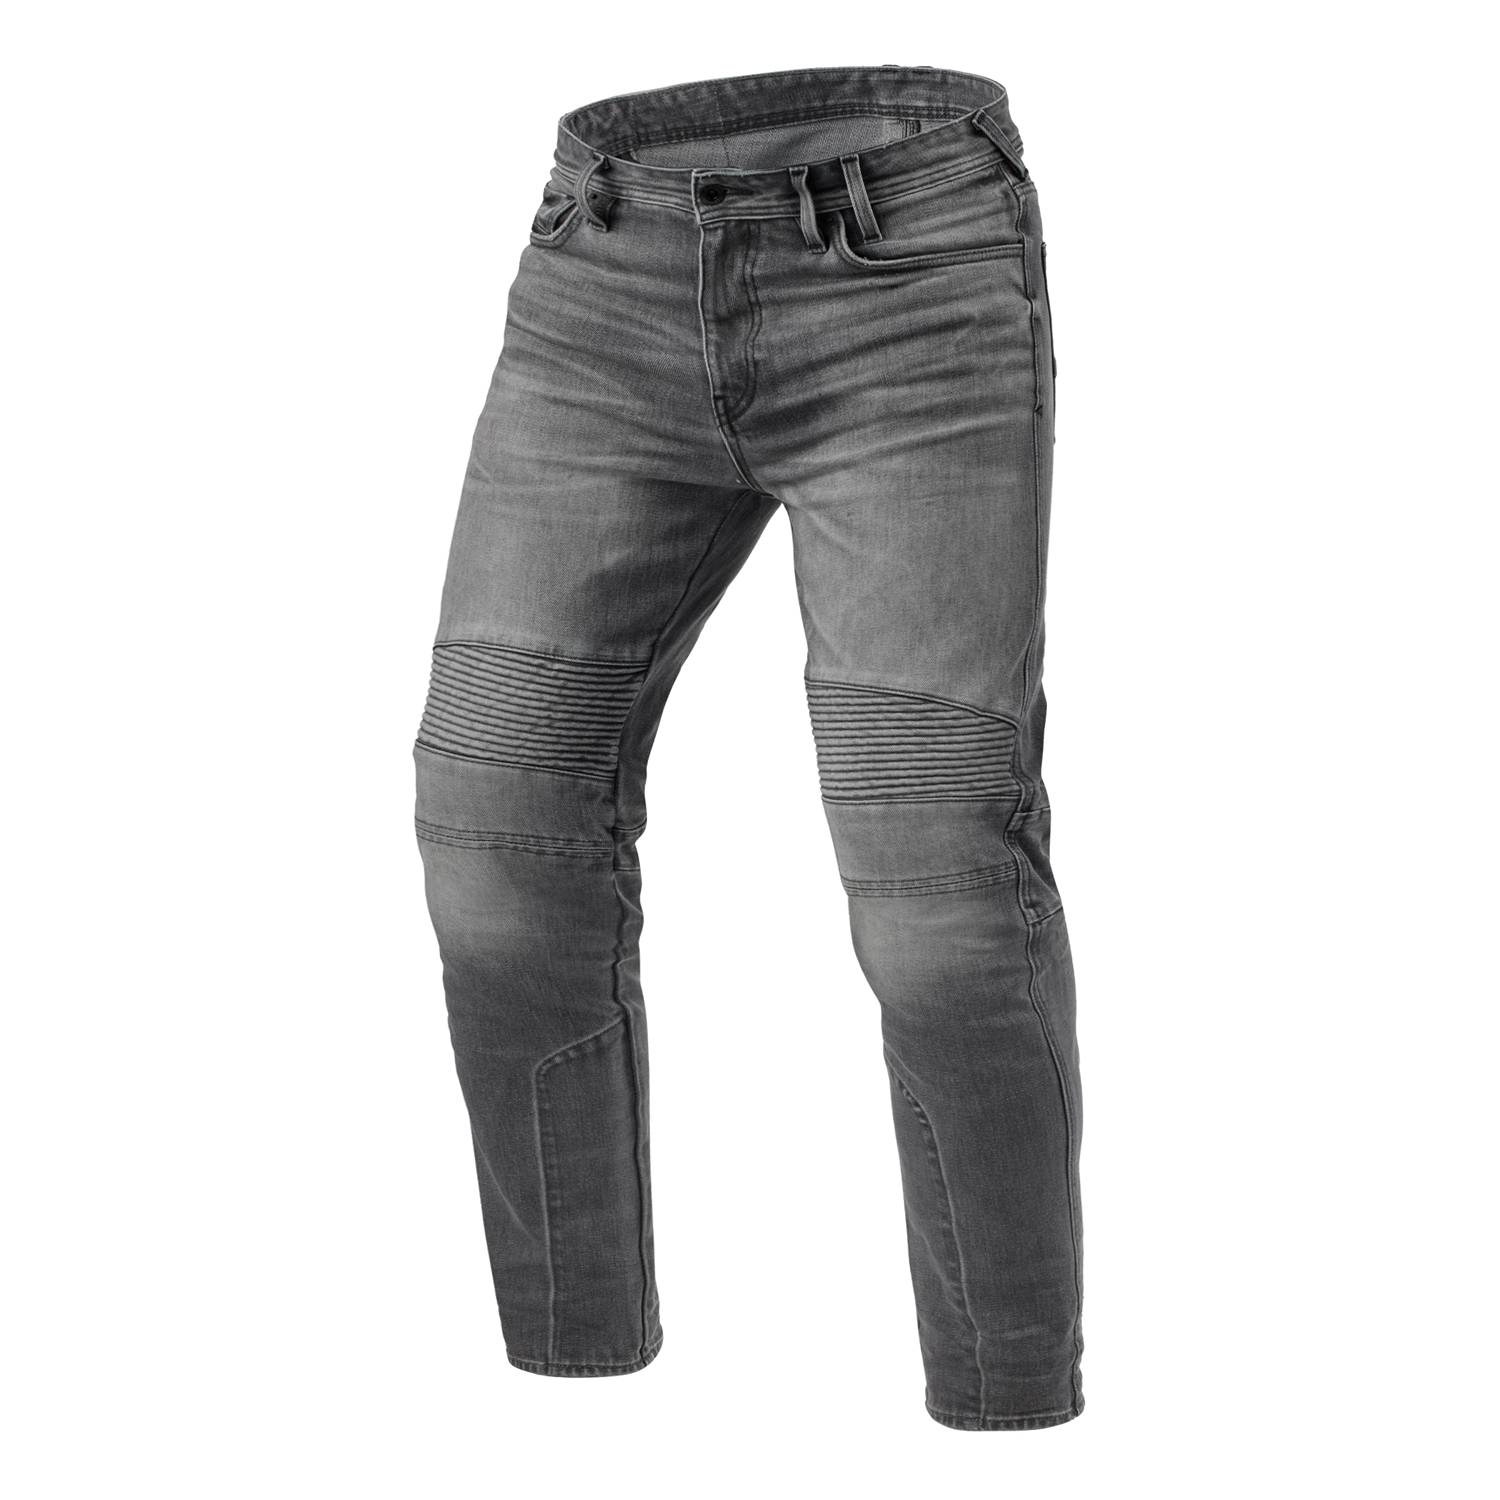 Image of REV'IT! Jeans Moto 2 TF Medium Grey Used L34 Motorcycle Jeans Size L34/W28 EN